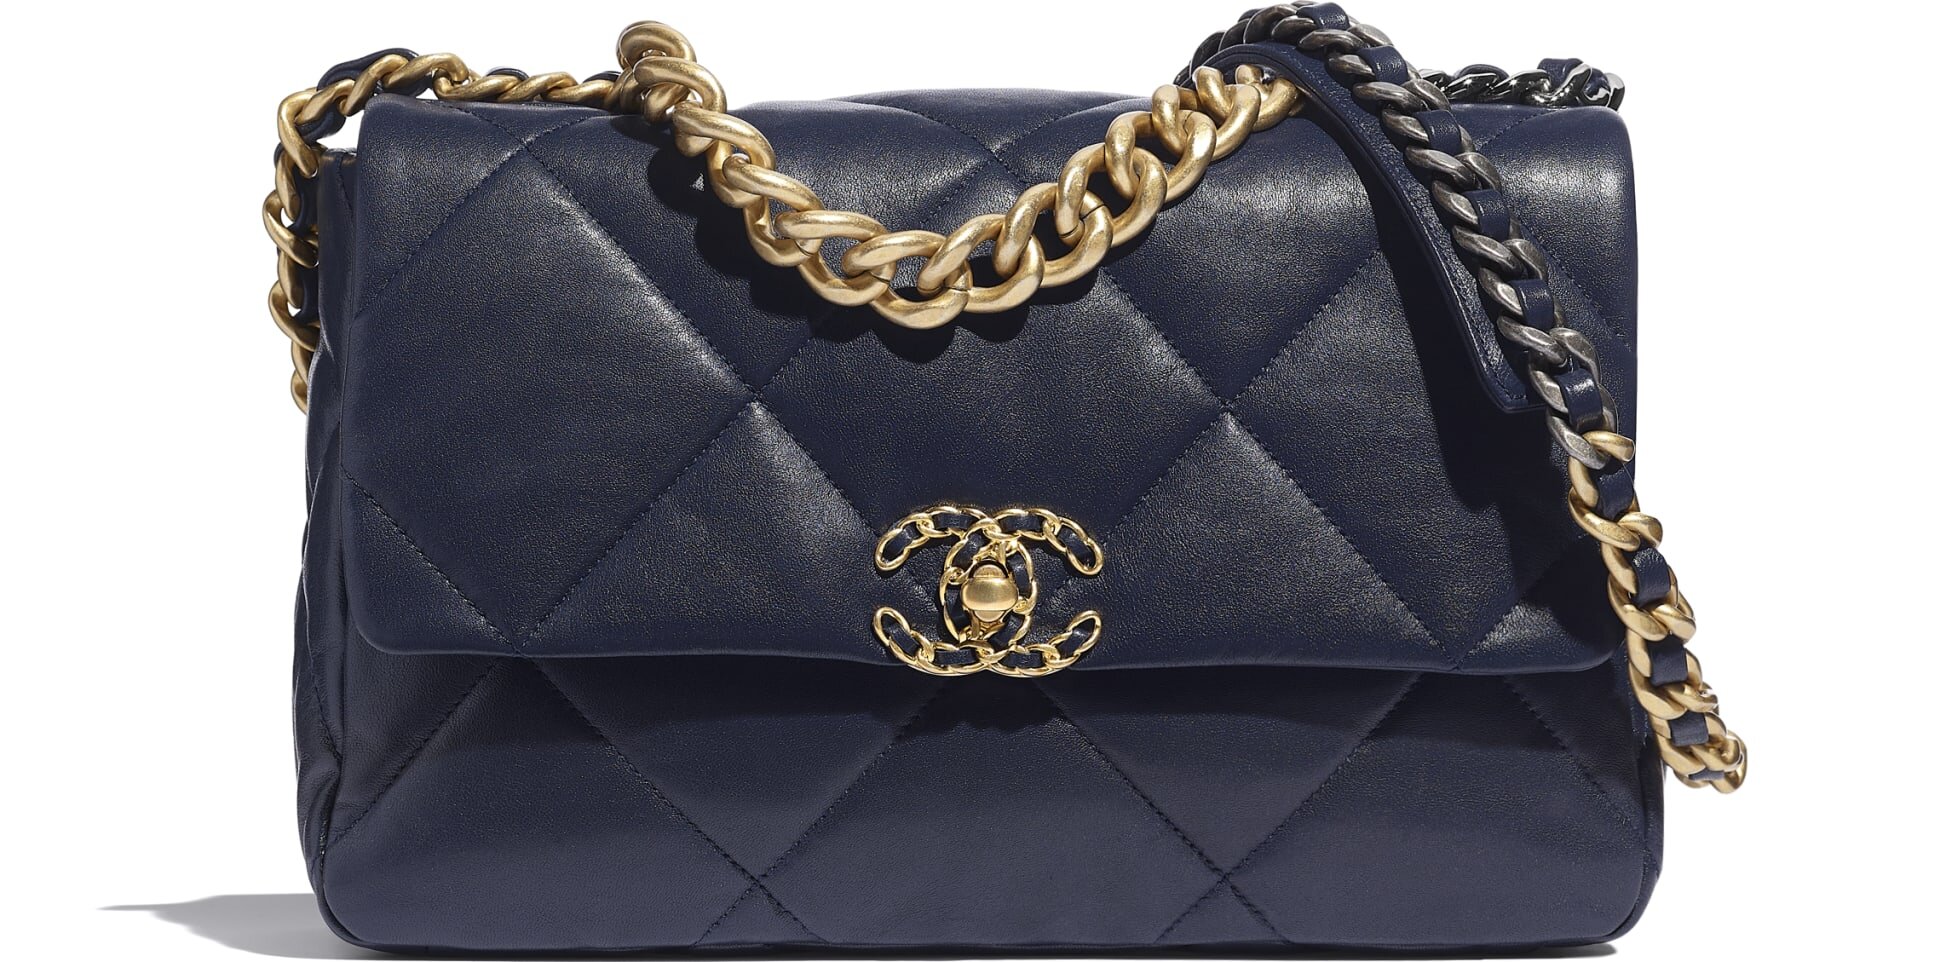 Chanel Spring Summer 2020 Handbags campaign featuring Margaret